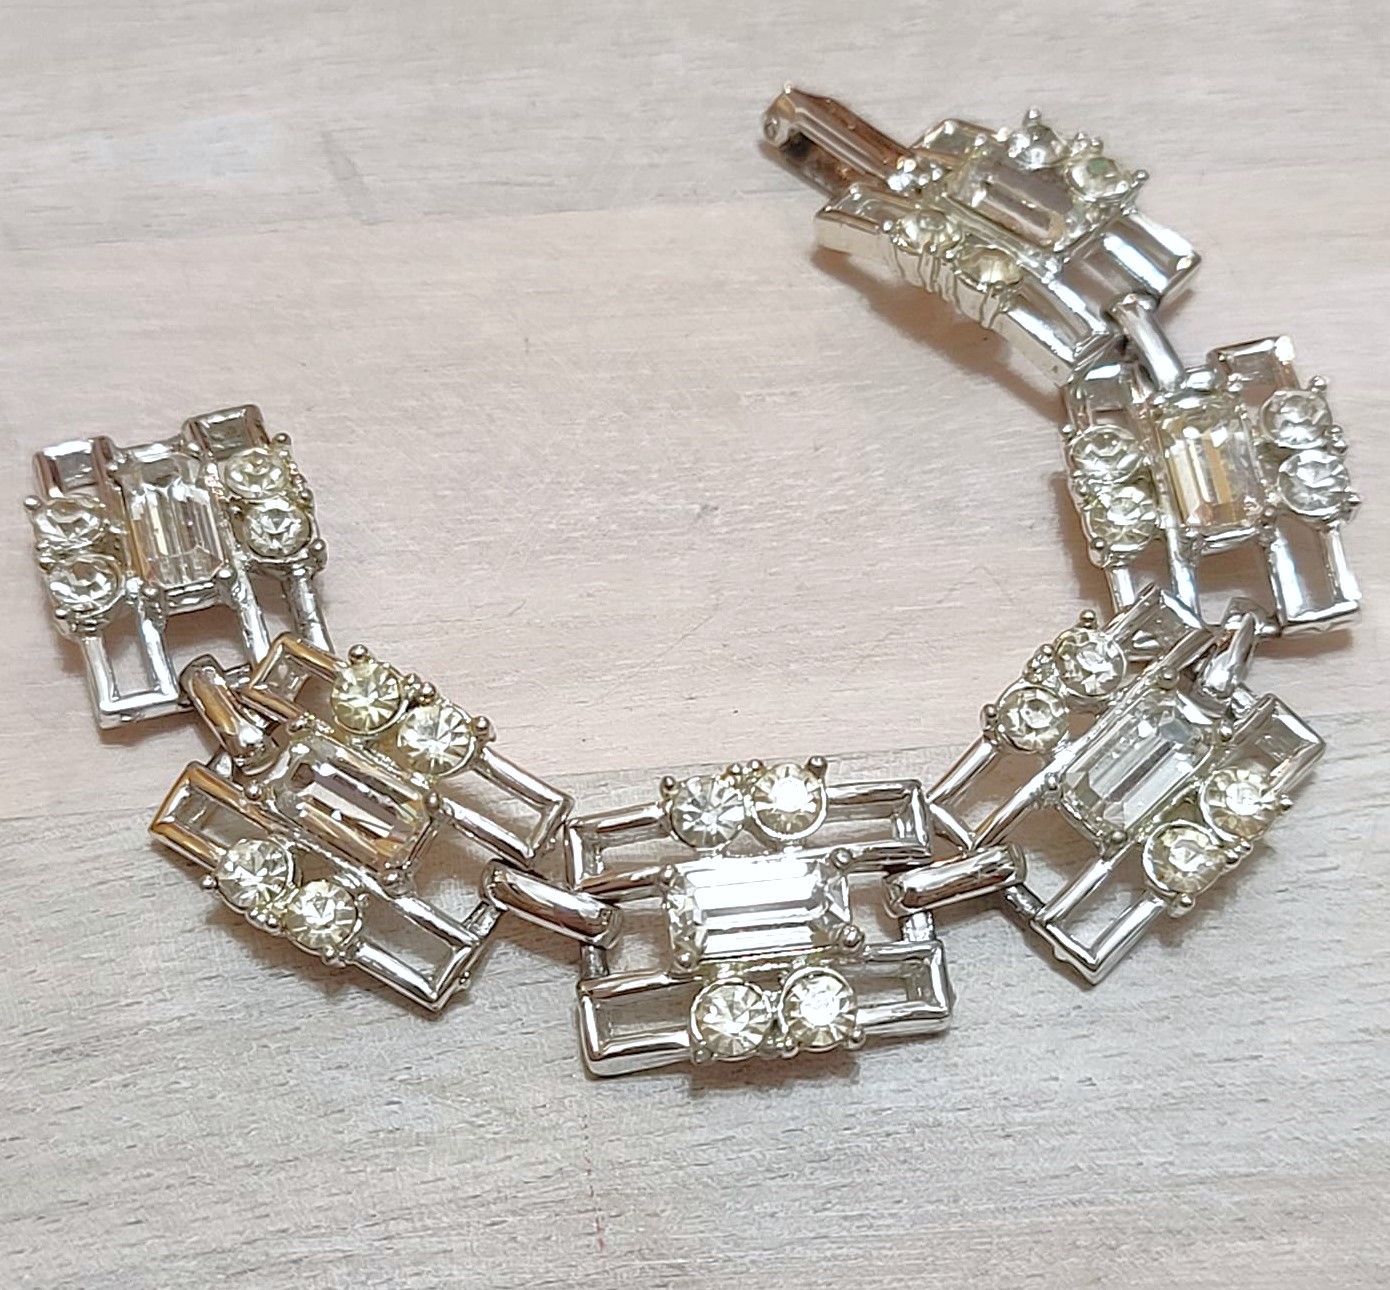 Vintage rhinestone bracelet, square link with white rhinestones